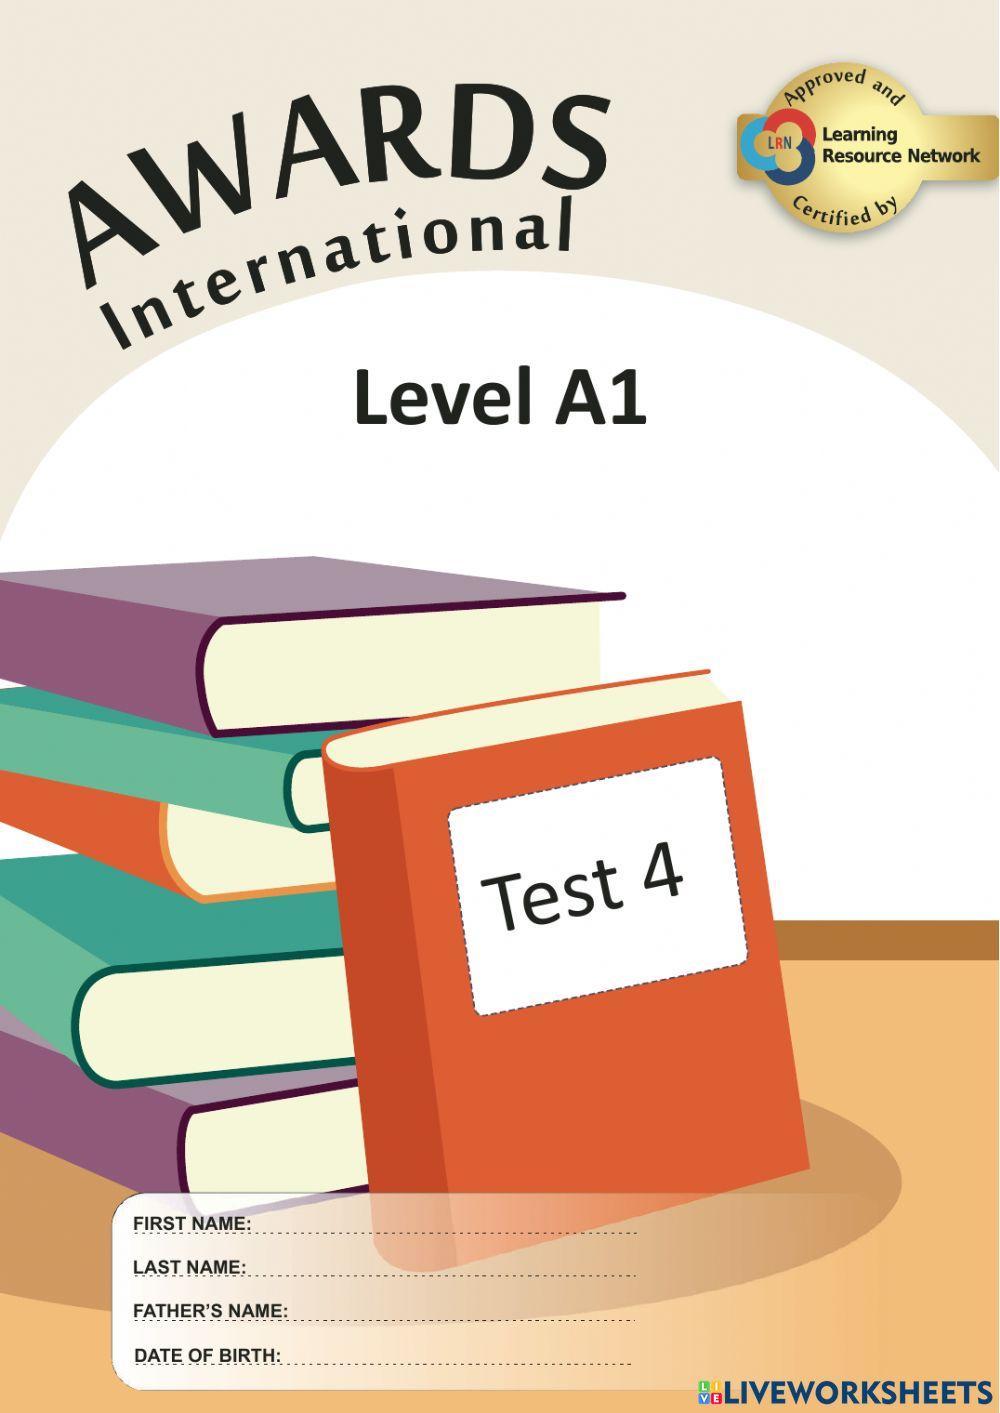 AWARDS LEVEL A1 TEST 4